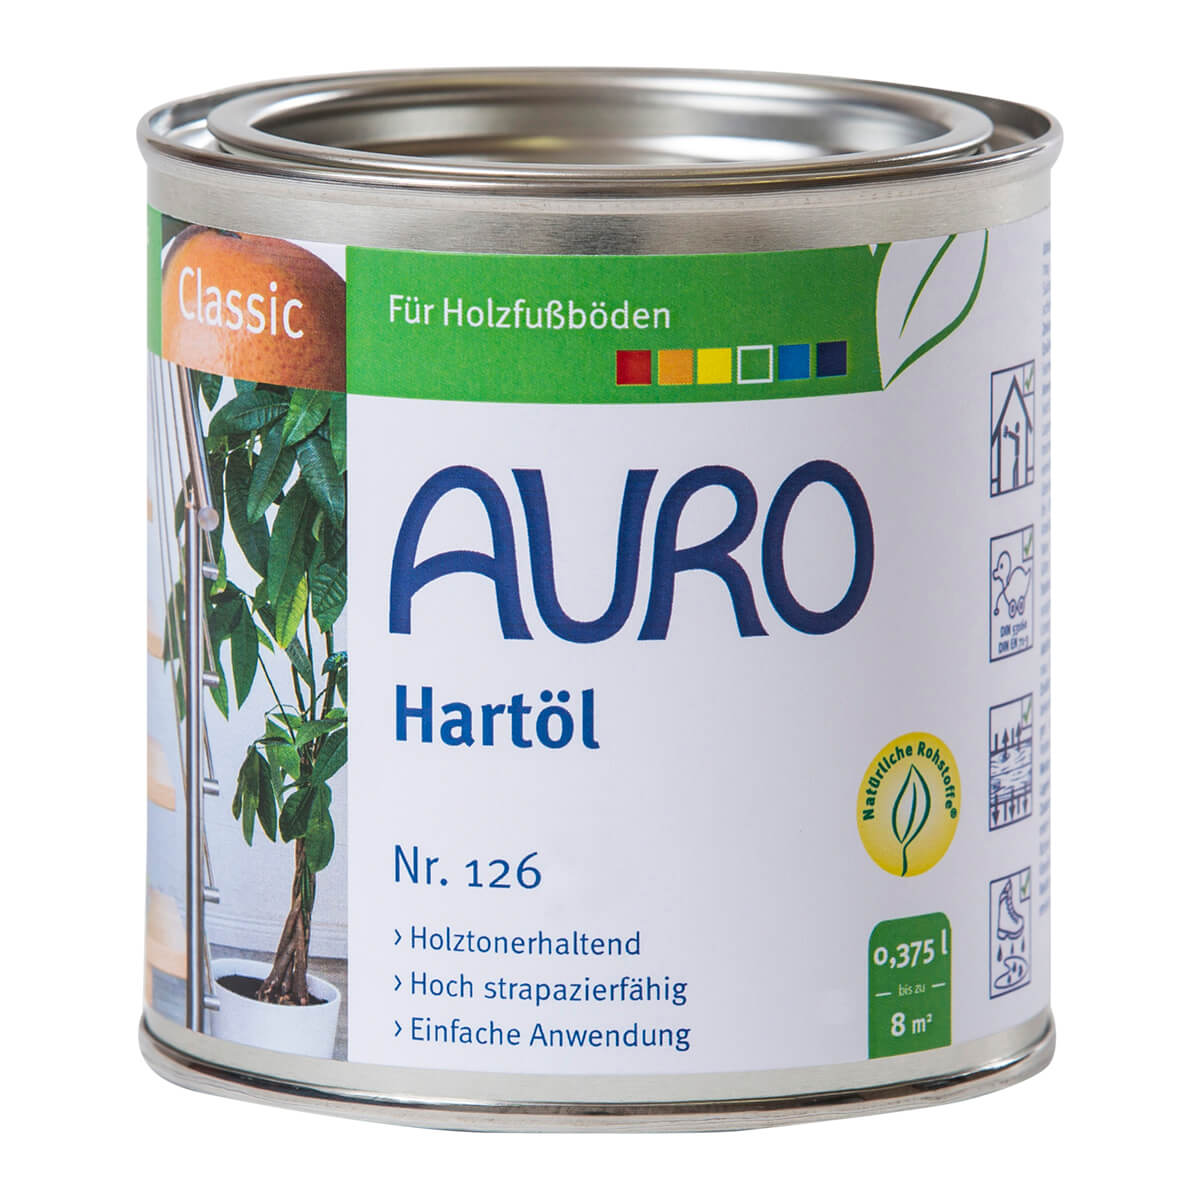 AURO Hartöl Fußbodenöl Naturfarben